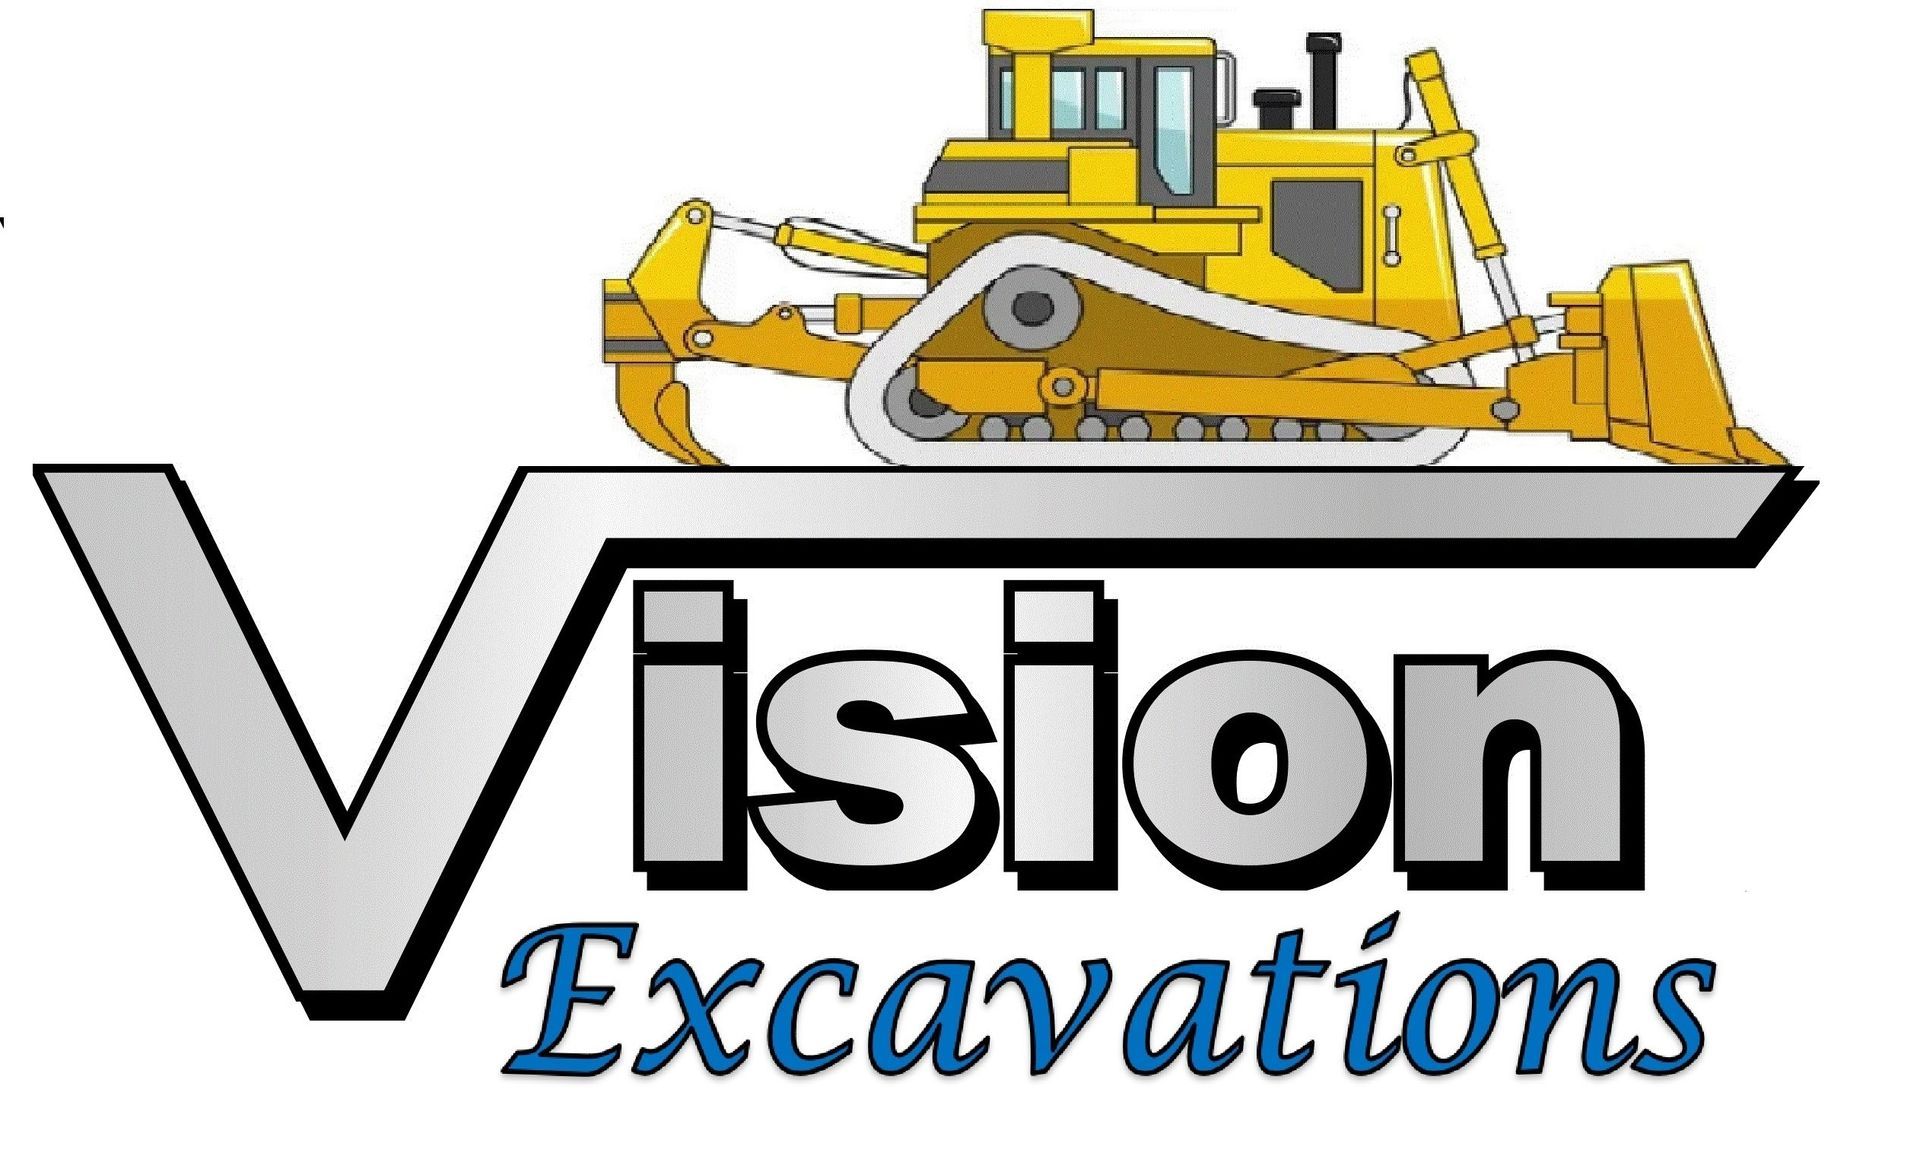 VISION EXCAVATIONS PTY LTD-logo